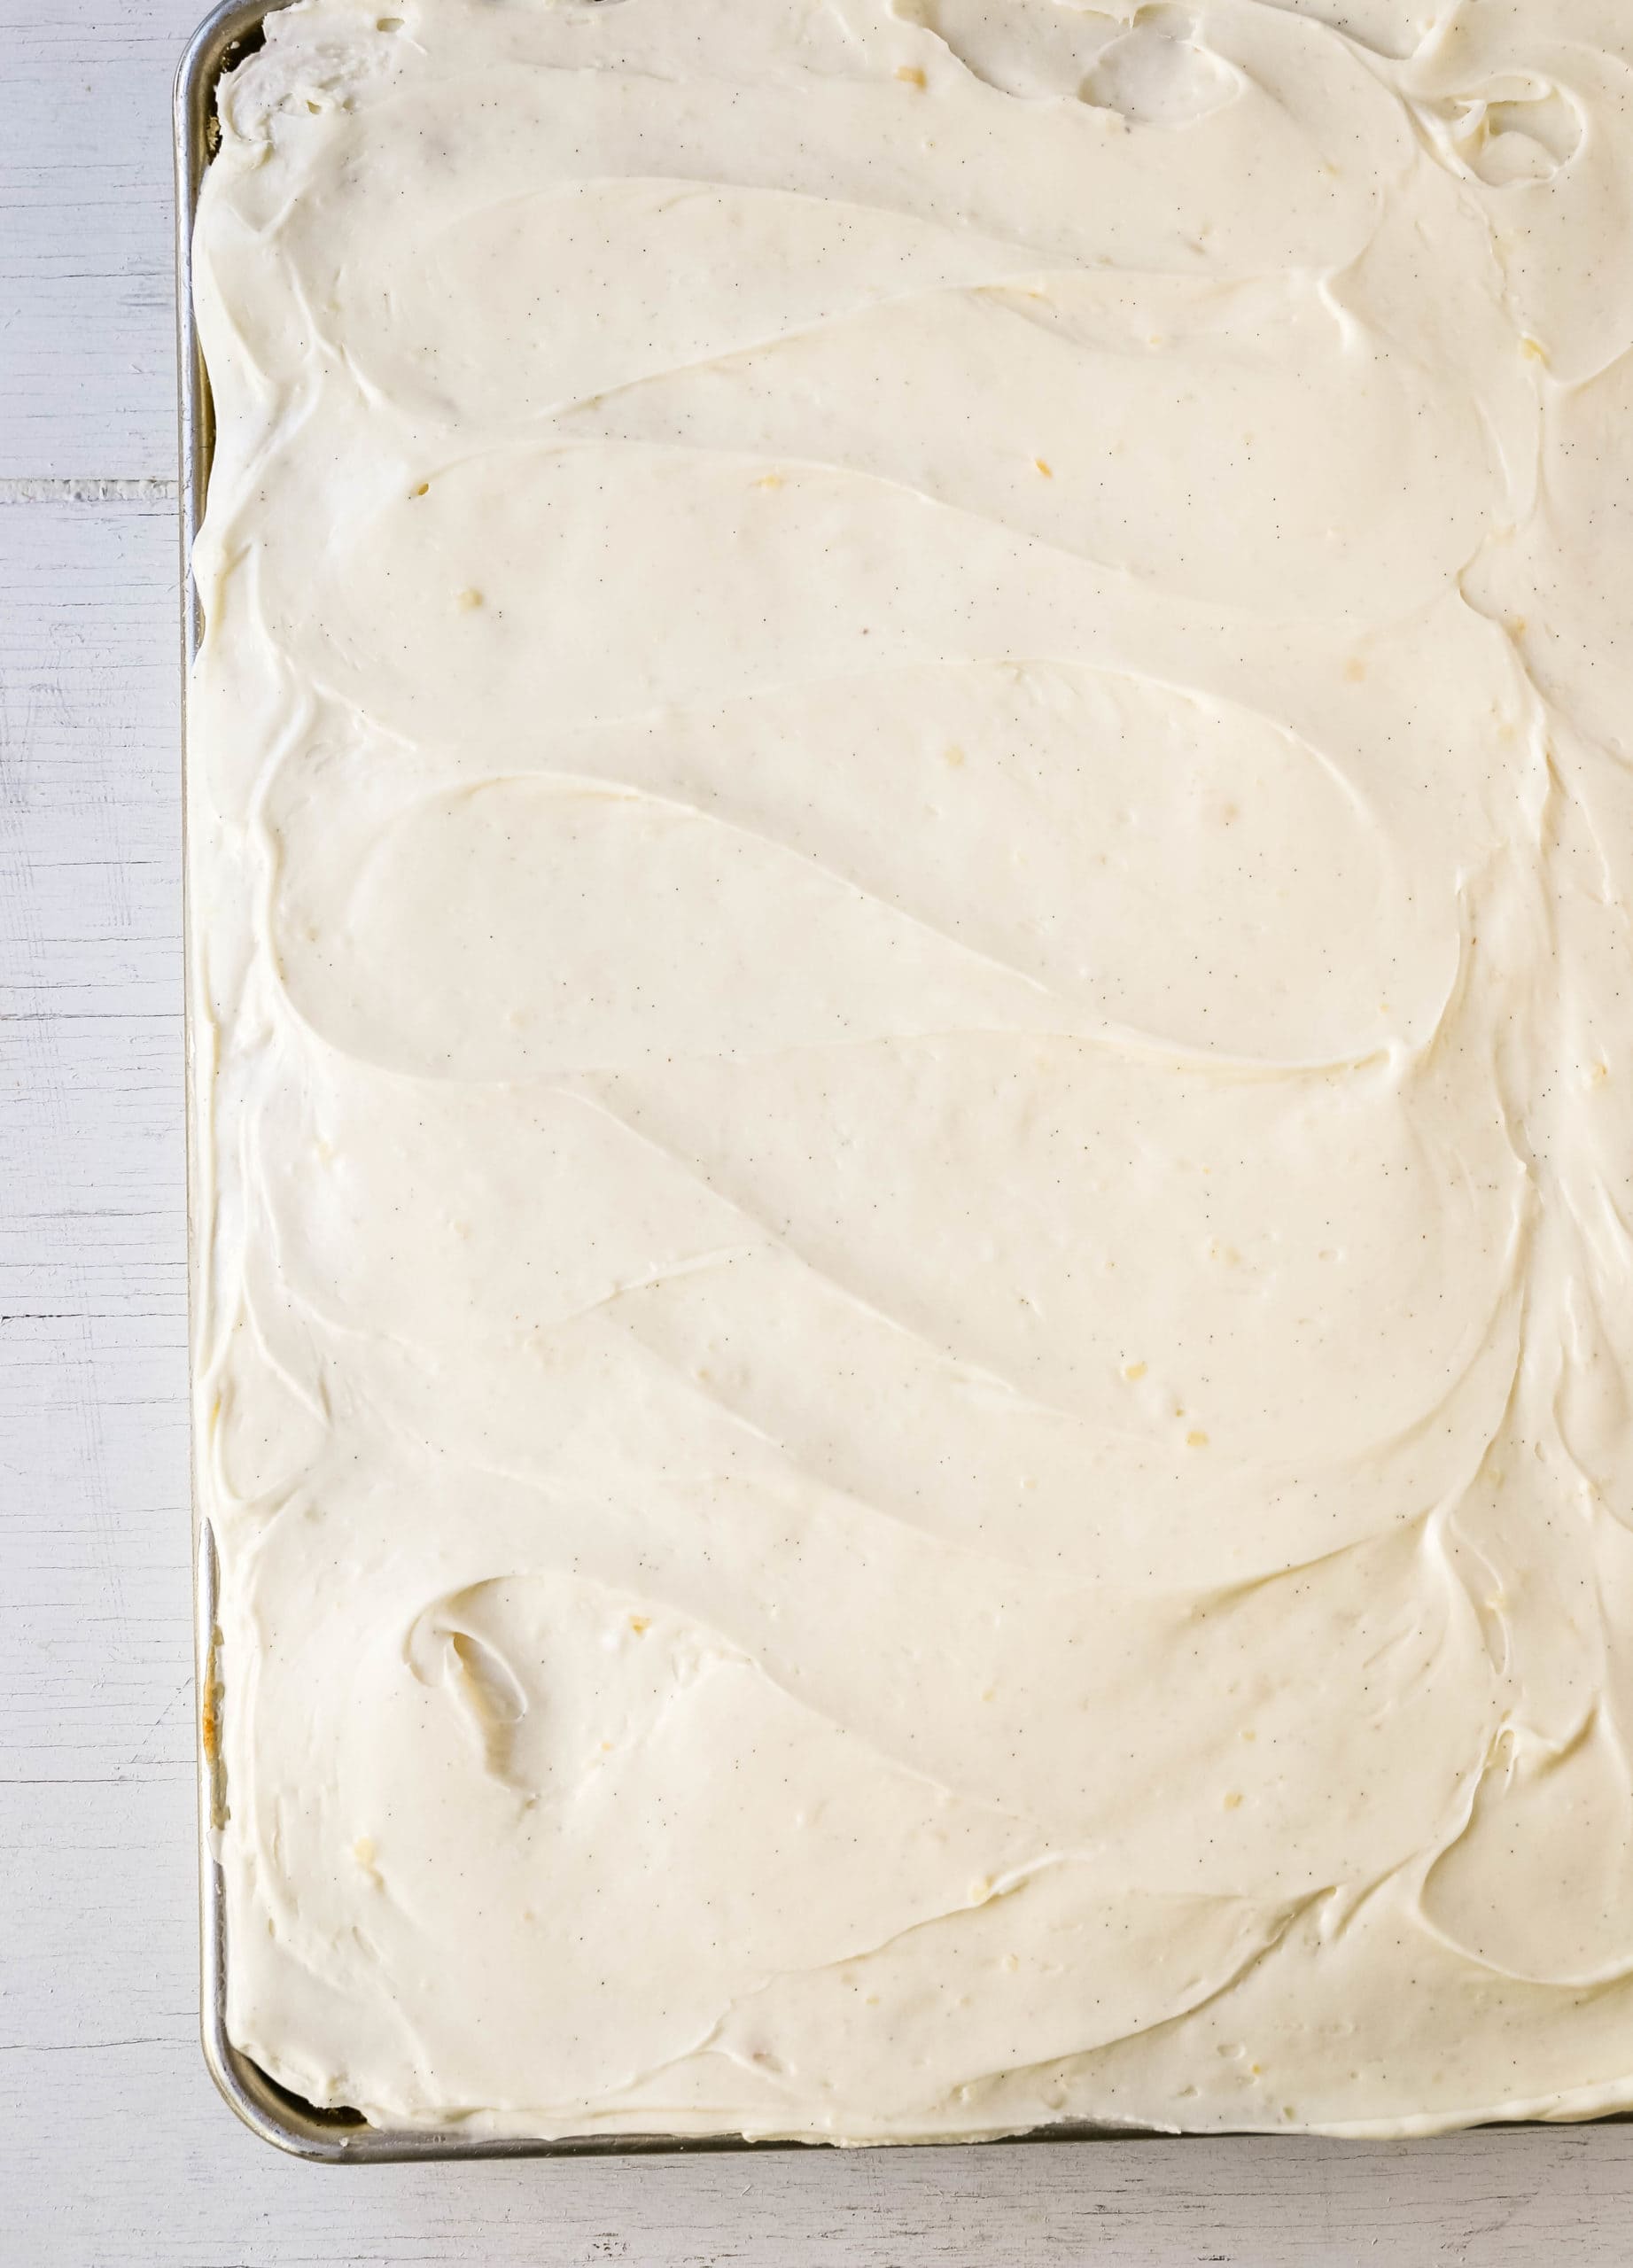 Banana Sheet Cake with Brown Butter Frosting Moist banana bars with a brown butter cream cheese buttercream. An easy frosted banana cake recipe! www.modernhoney.com #bananacake #bananabars #frostedbananacake #frostedbananabars #bananarecipes